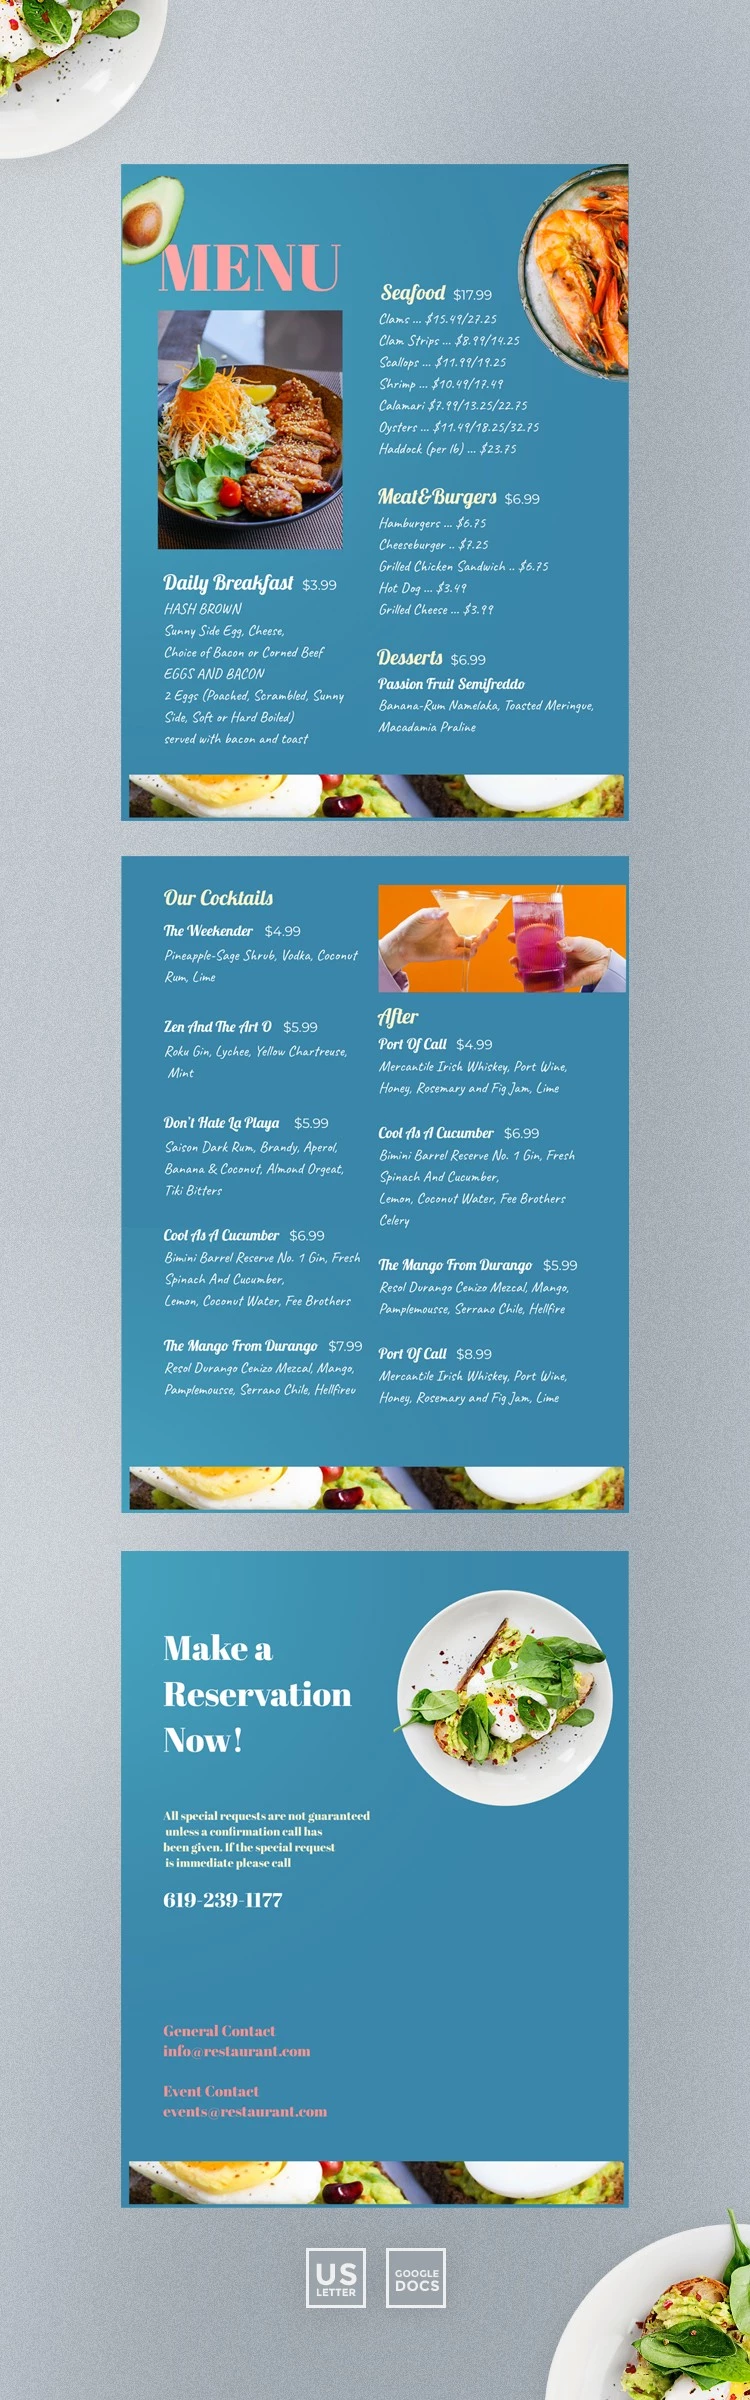 Restaurant Menu Design - free Google Docs Template - 10061509